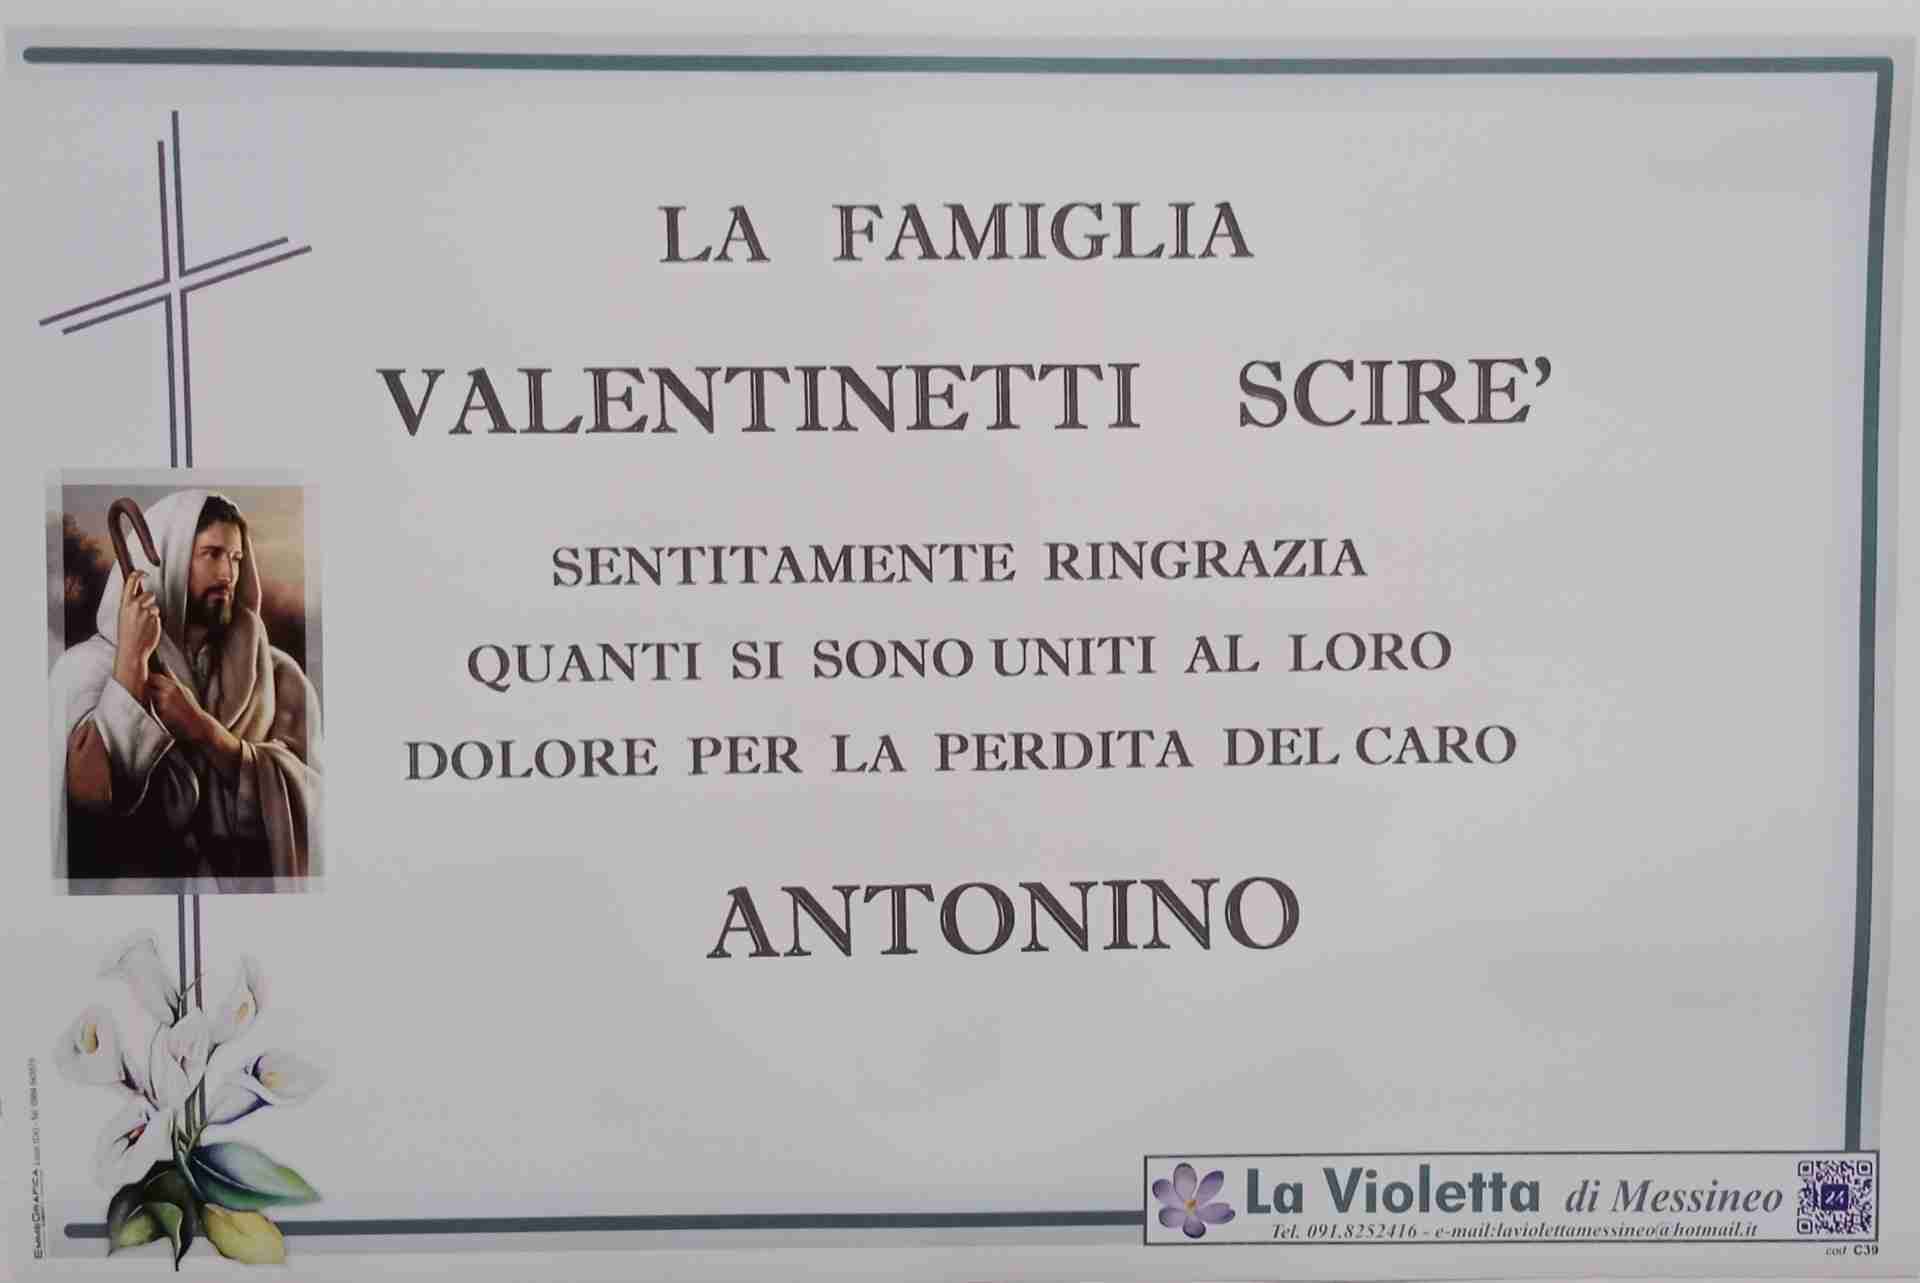 Antonino Valentinetti